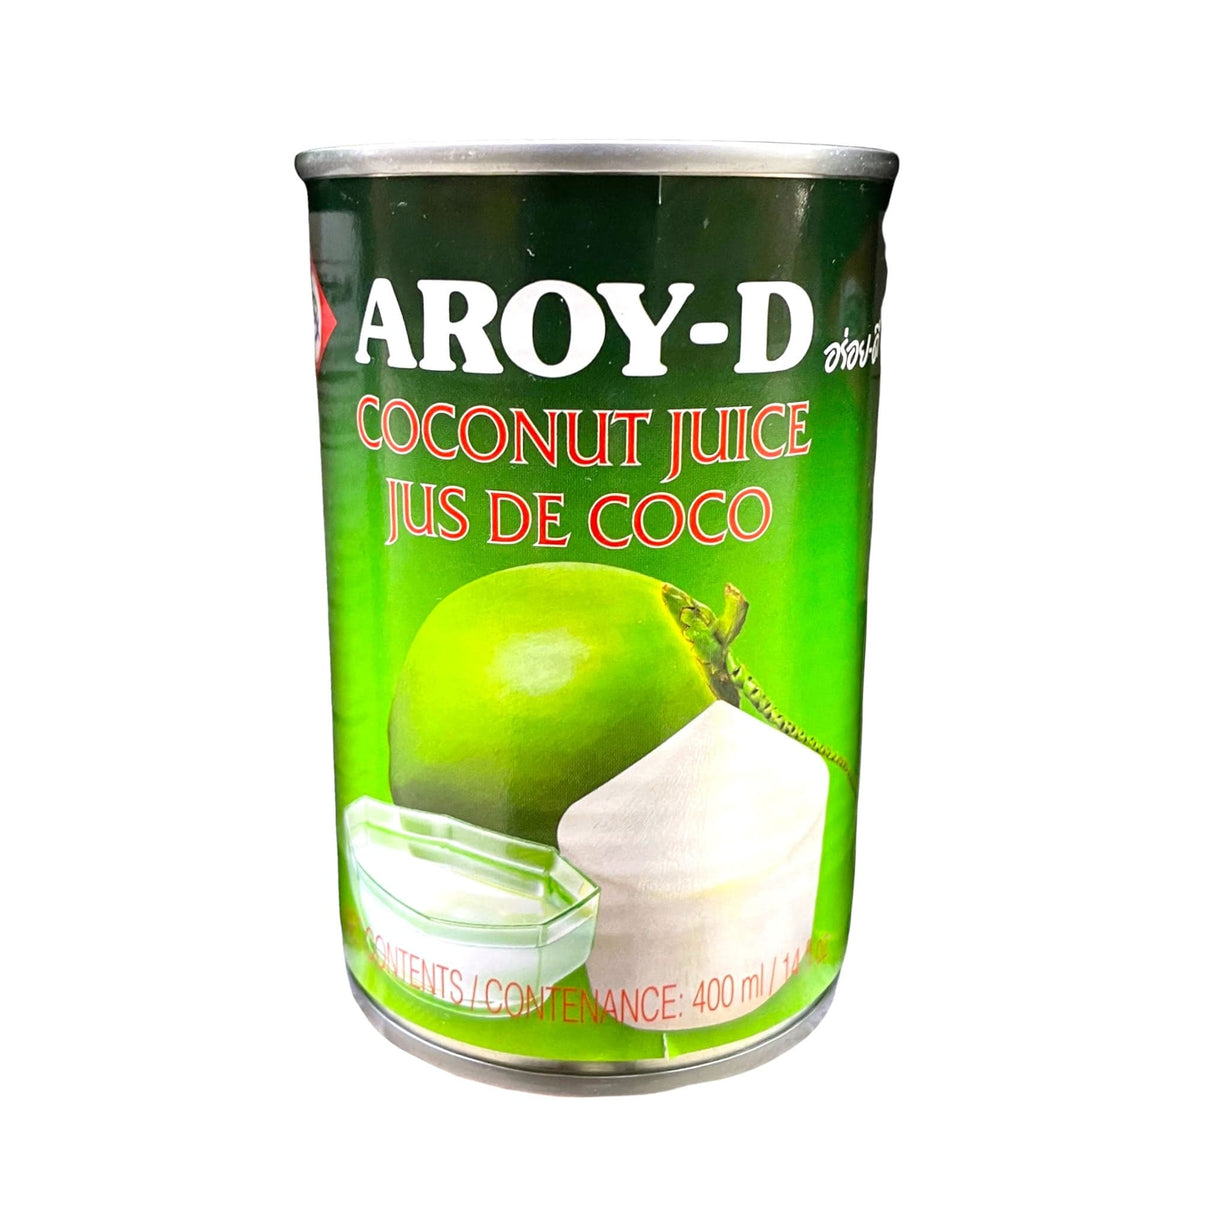 Aroy-d Coconut Juice